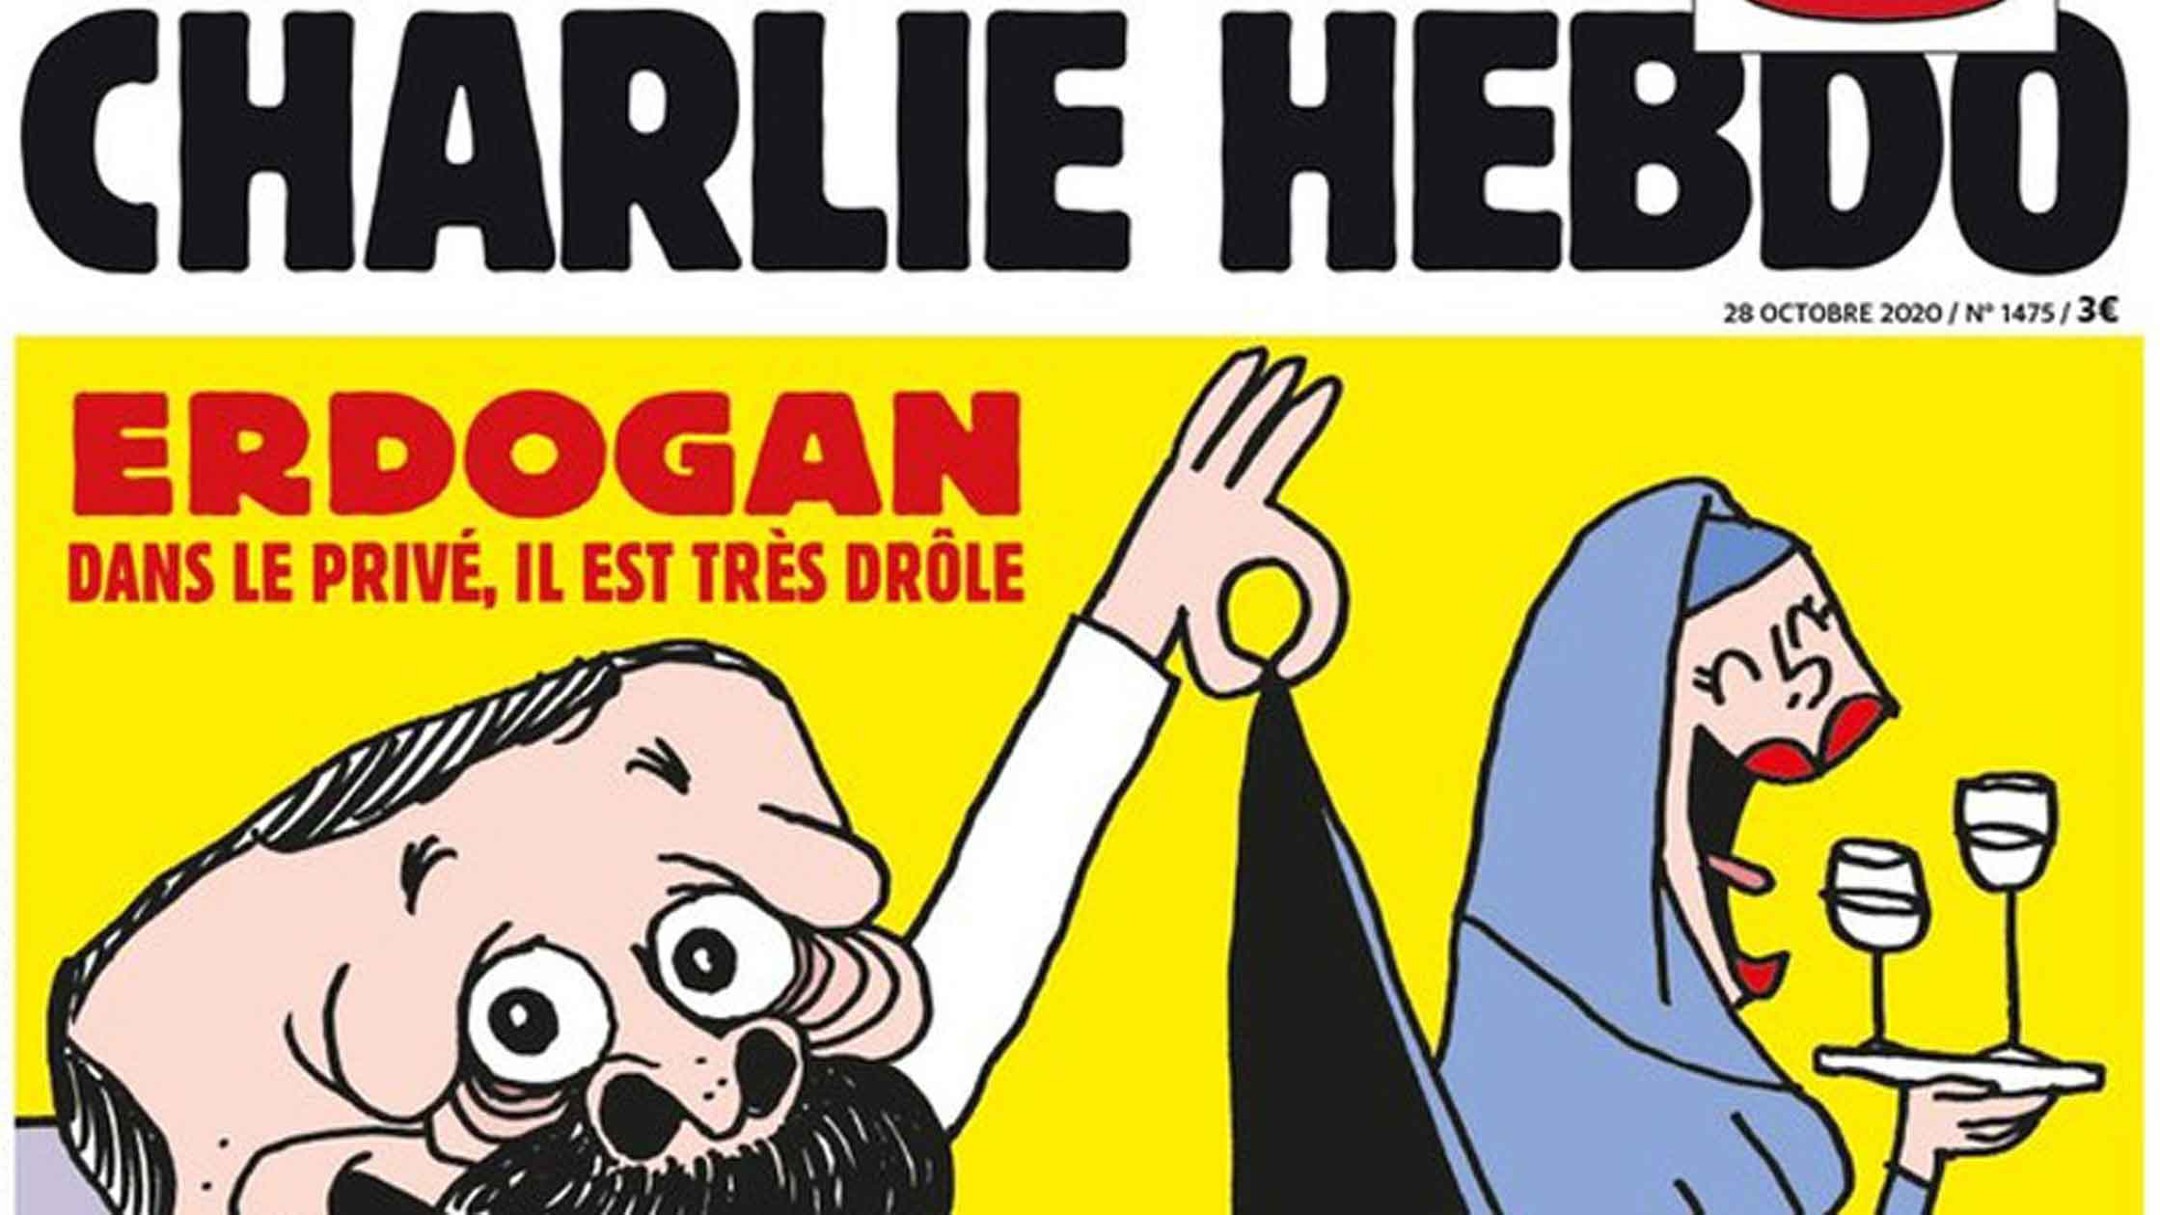 Dailystorm - В Турции возбудили дело против Charlie Hebdo за карикатуру на Эрдогана